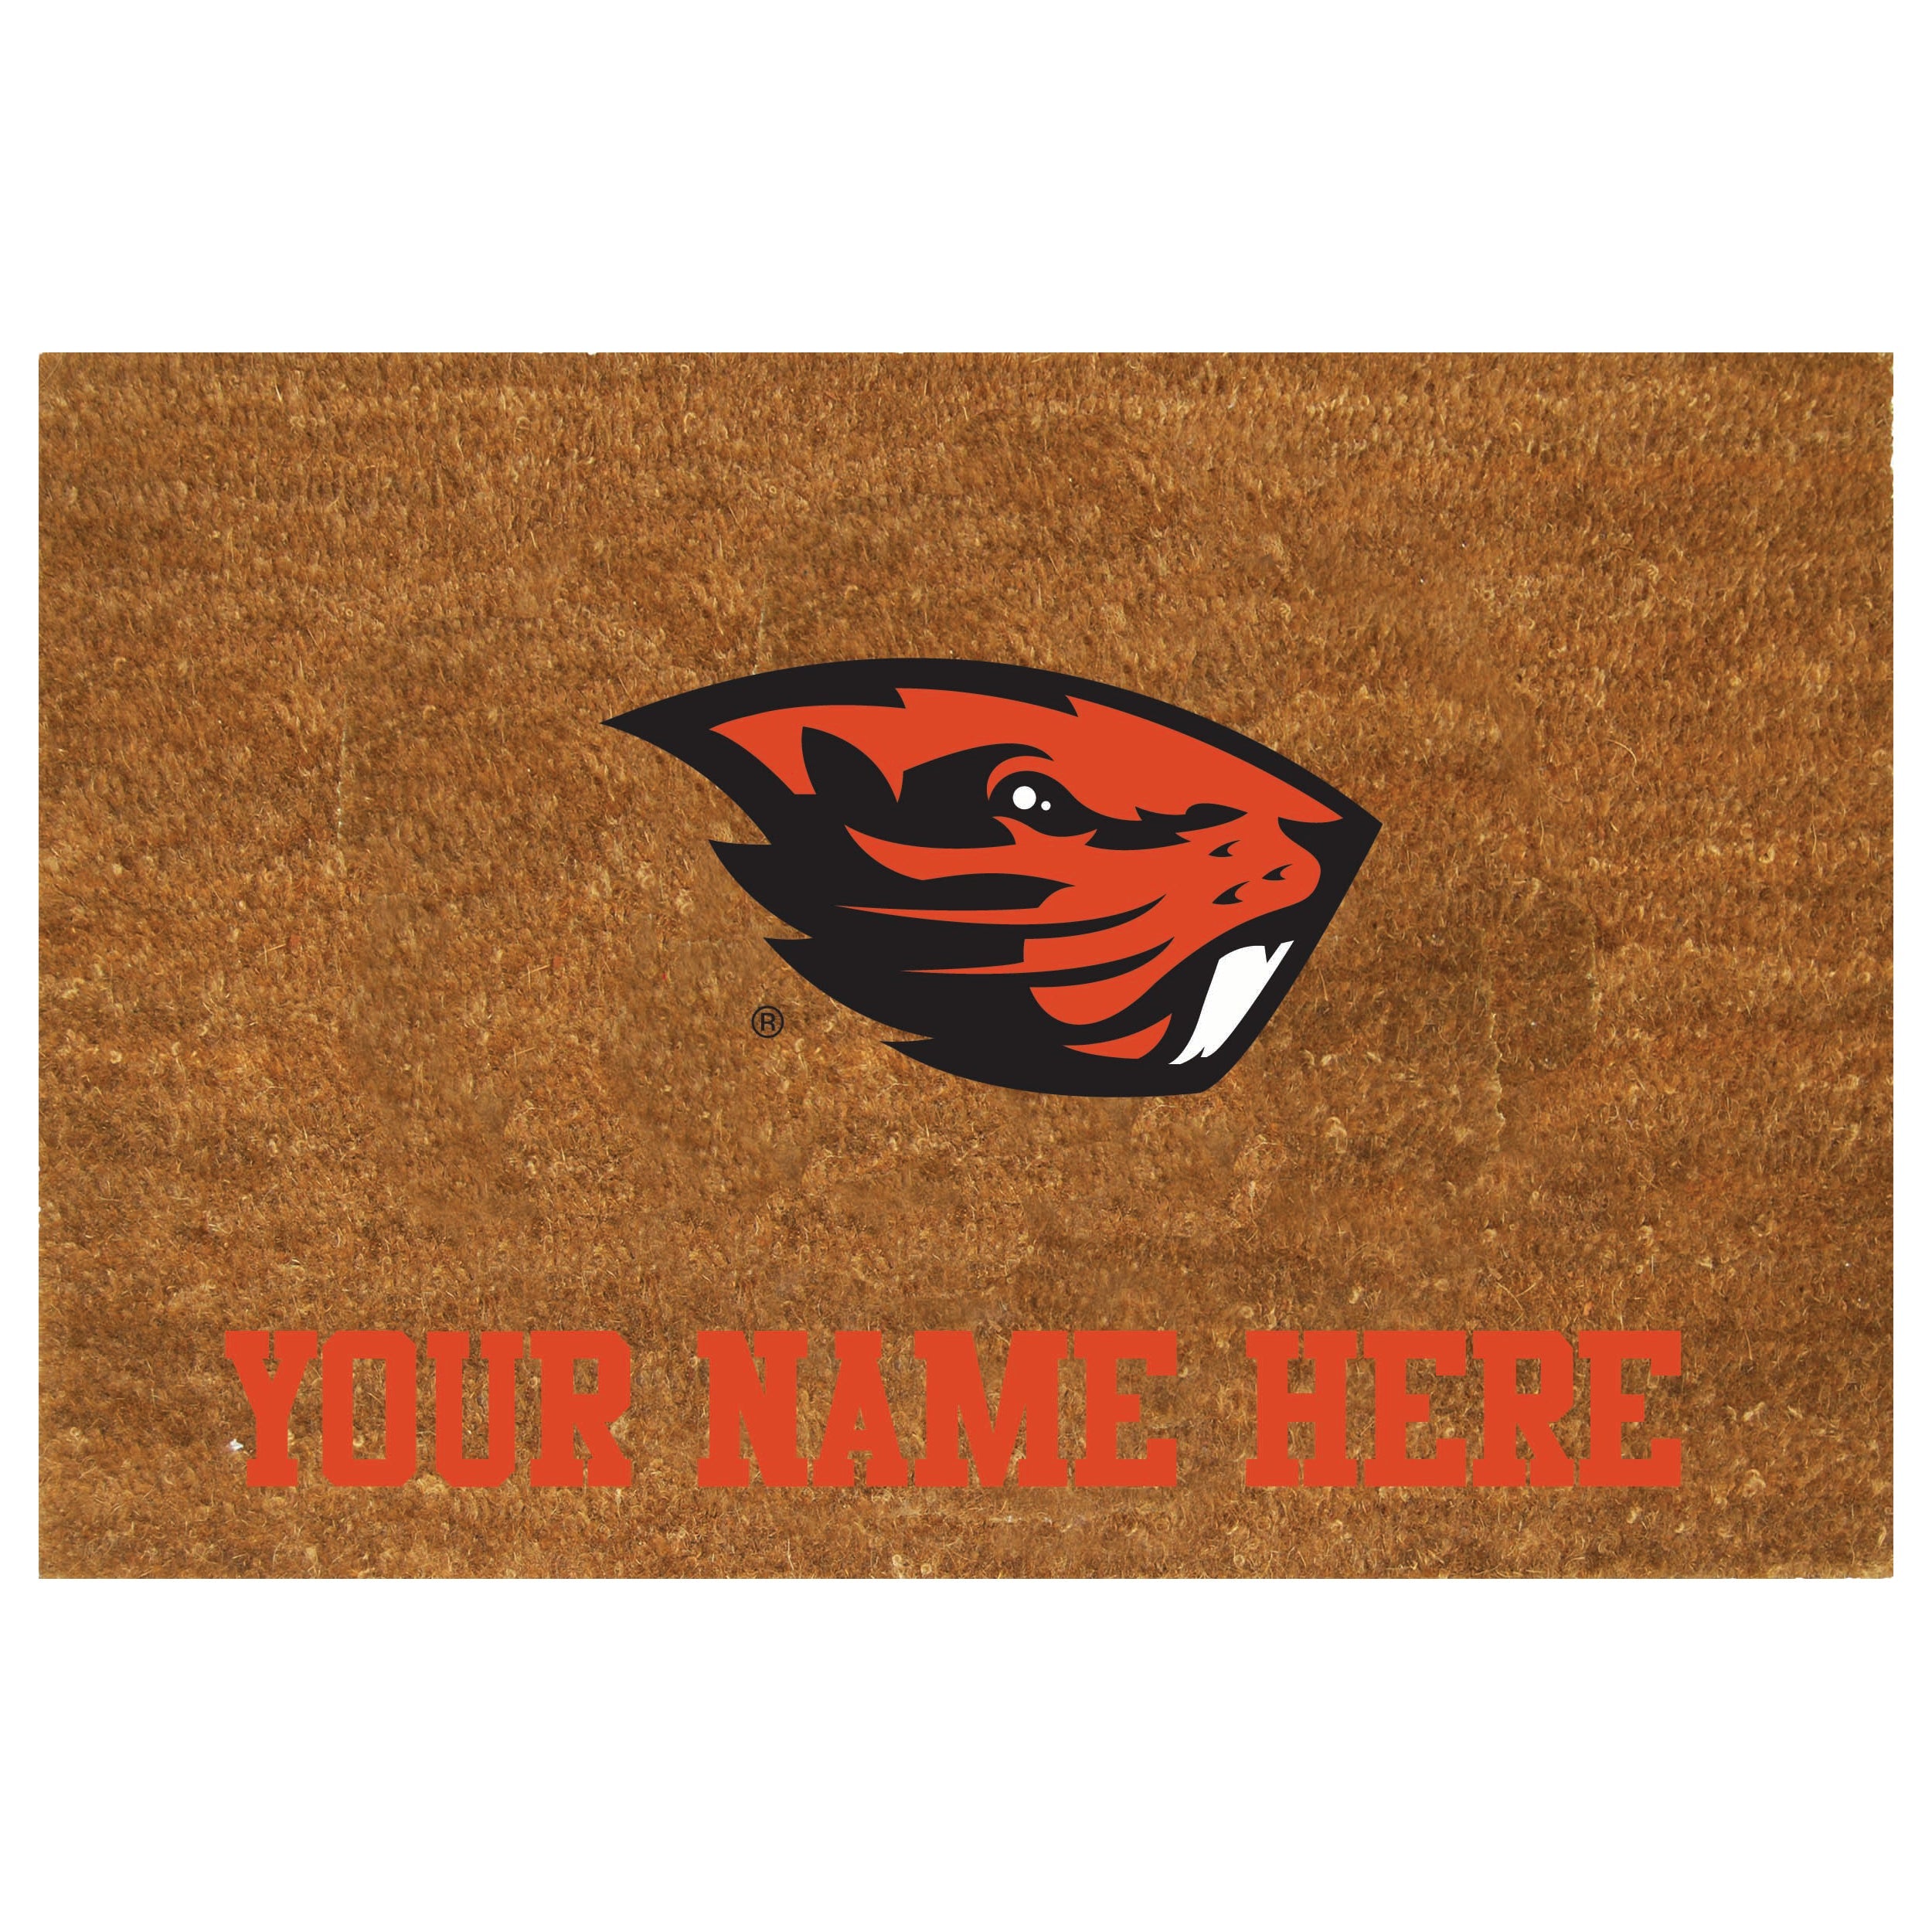 Personalized Doormat | Oregon State Beavers